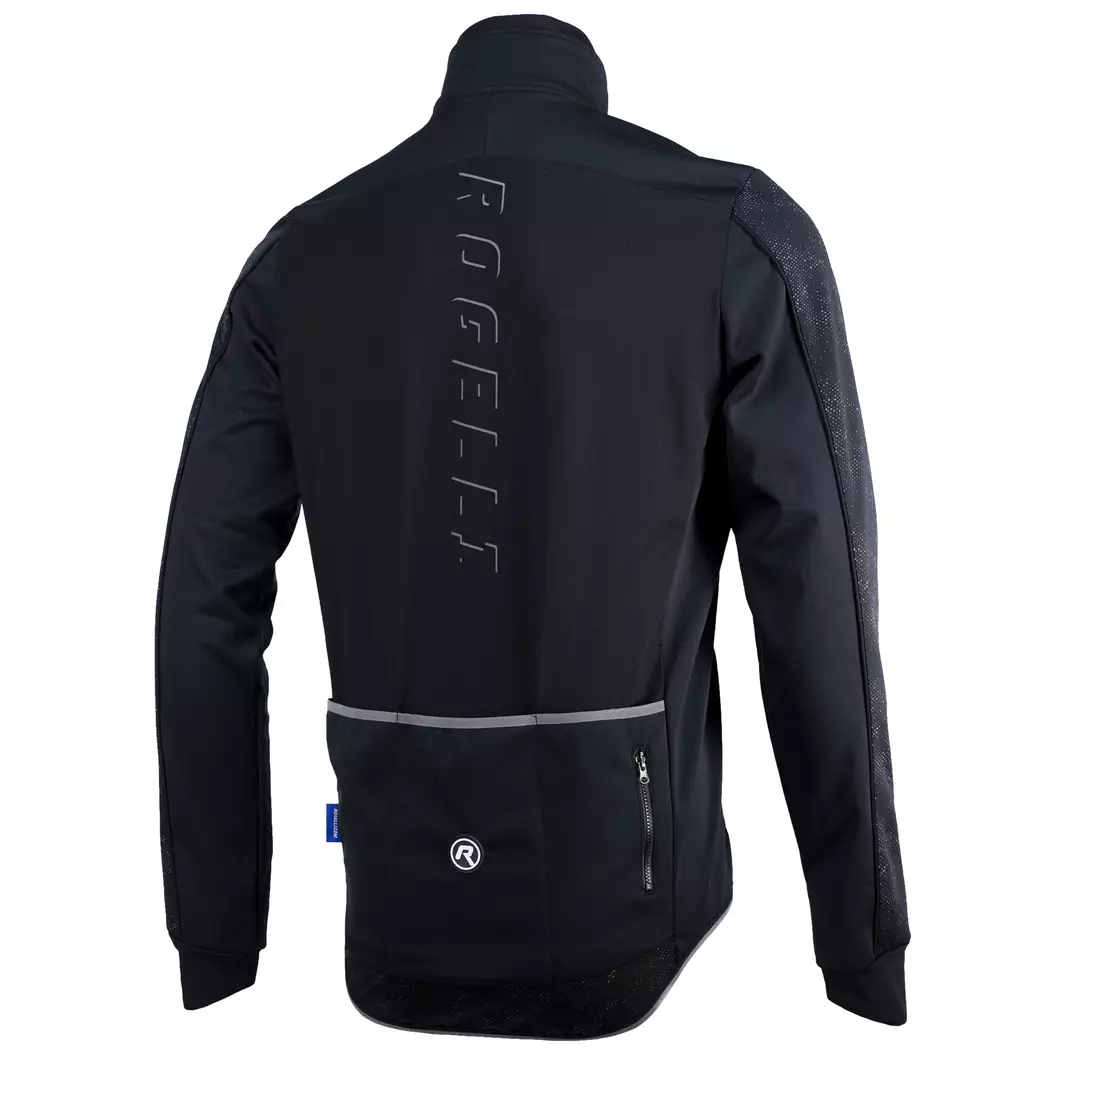 ROGELLI RENON 3.0 zimná cyklistická bunda, softshellová, reflexná, čierna